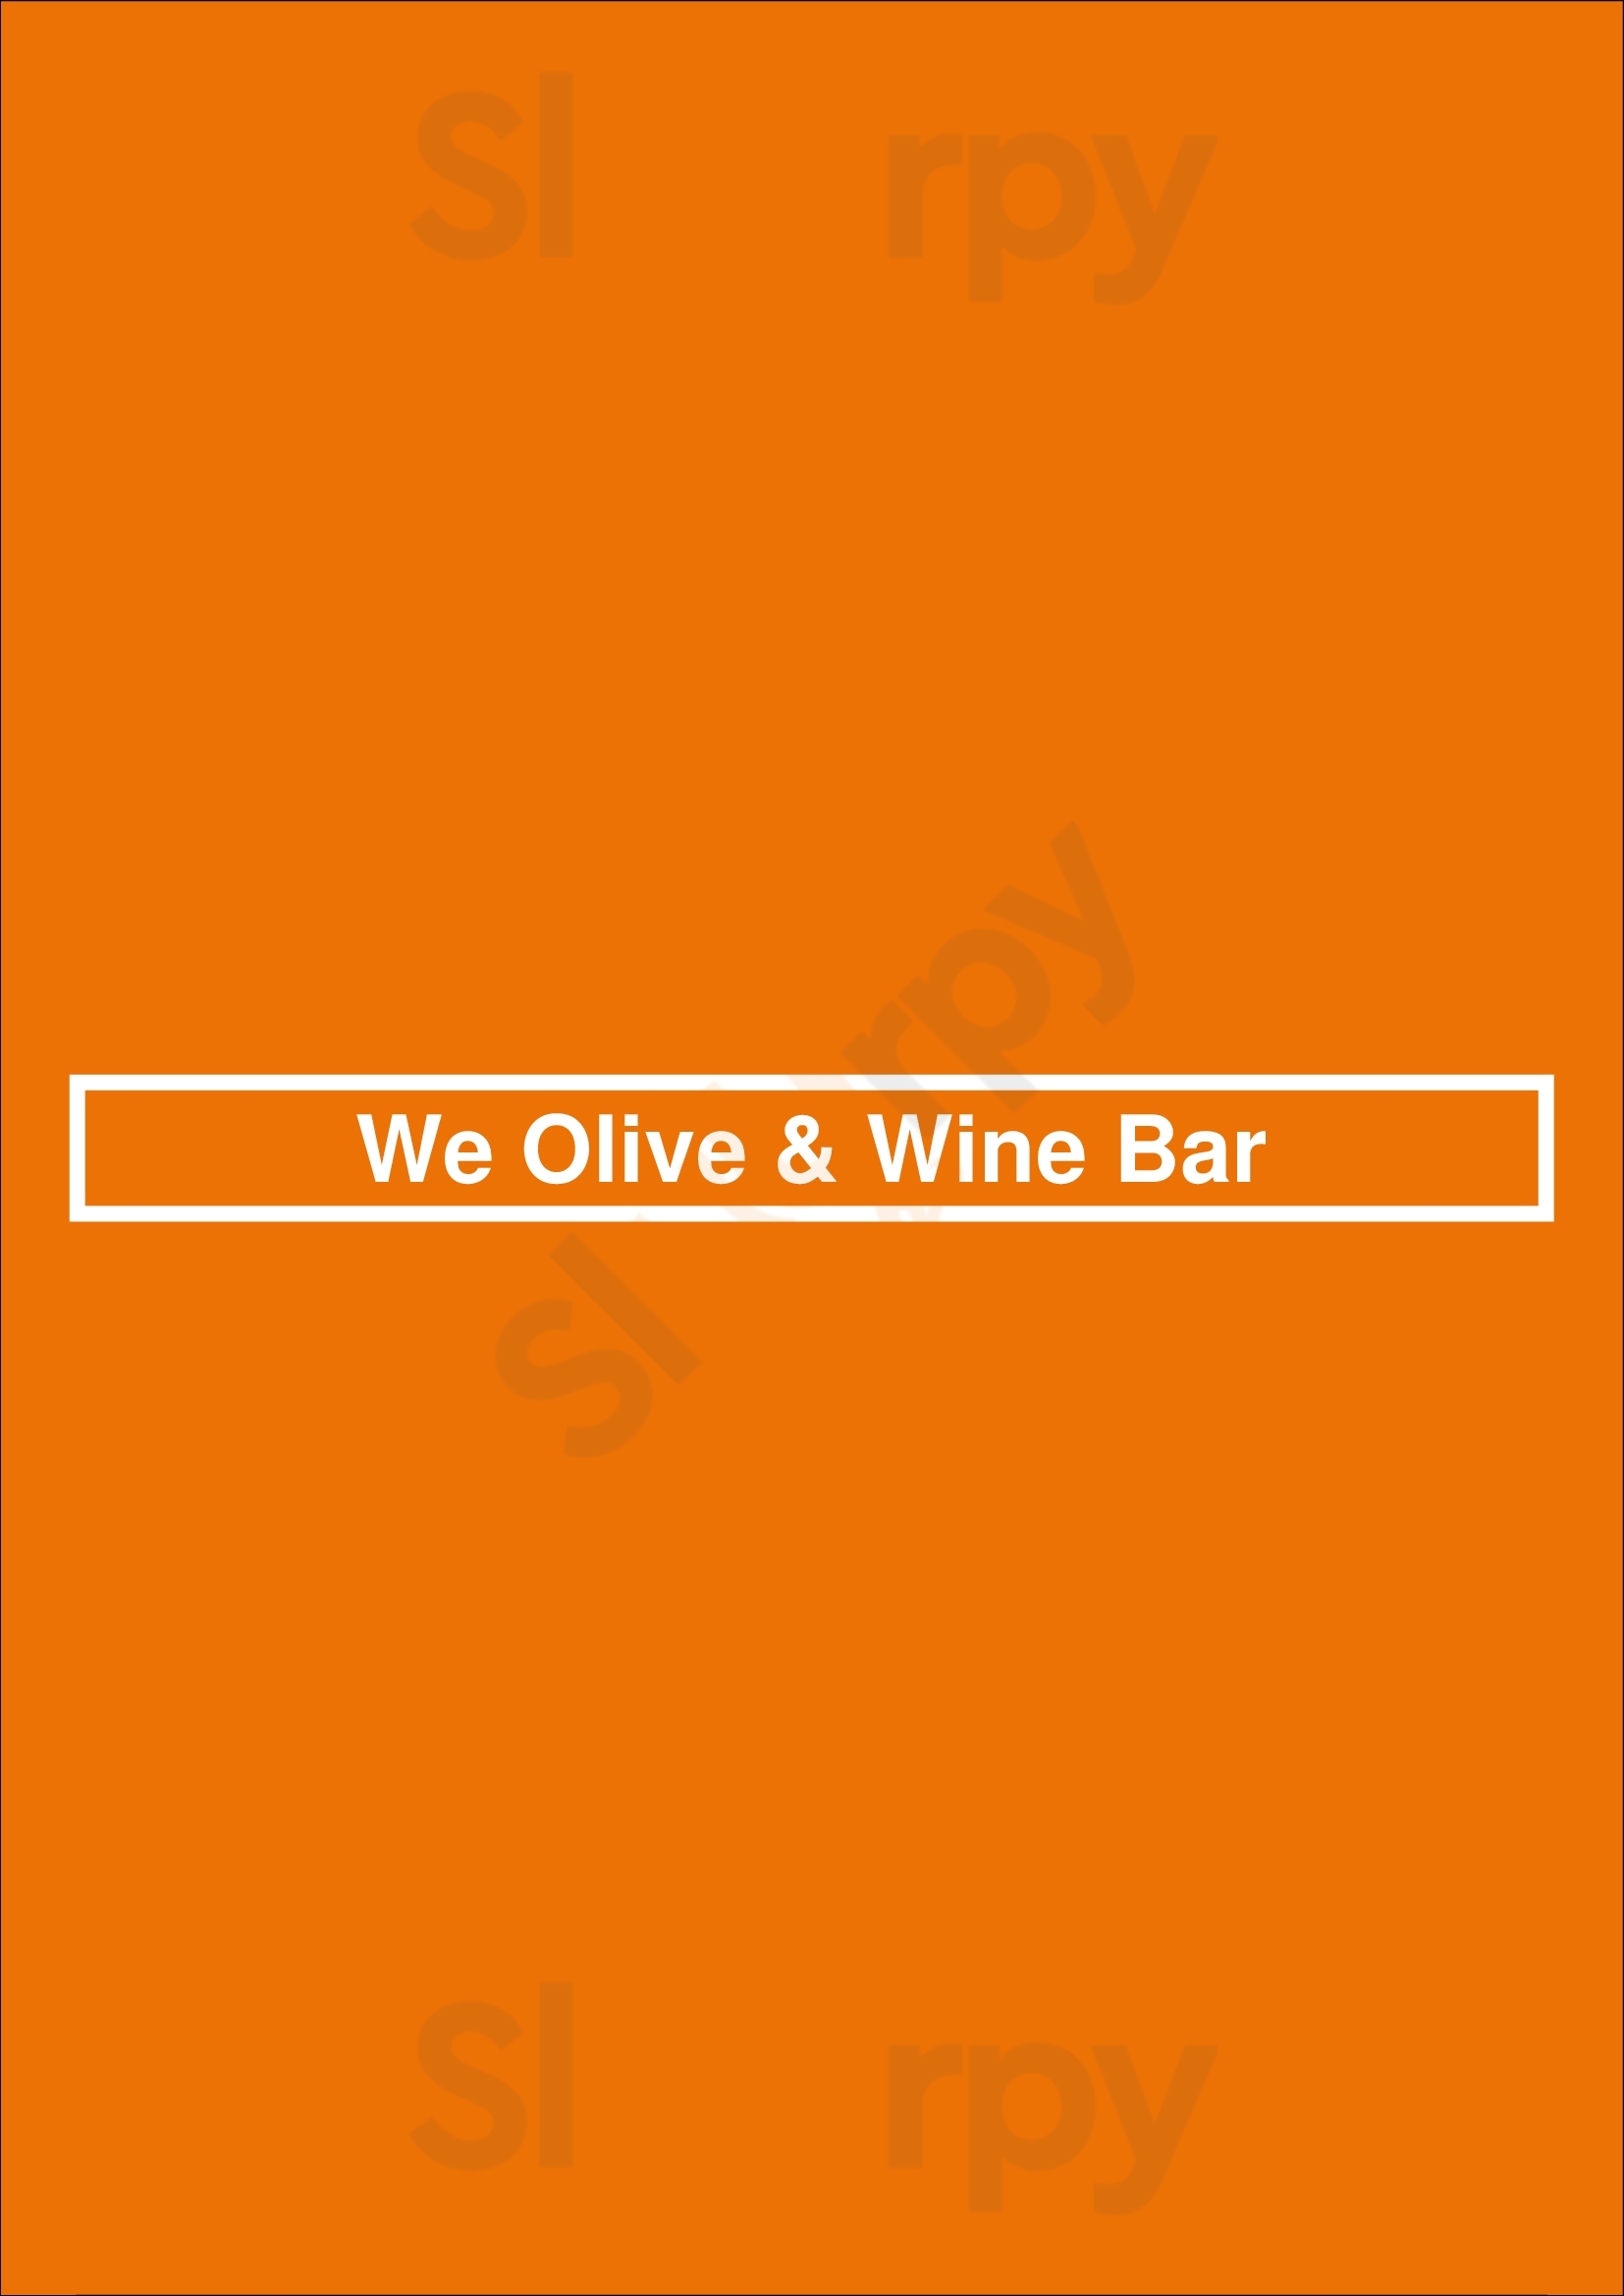 We Olive & Wine Bar Houston Menu - 1